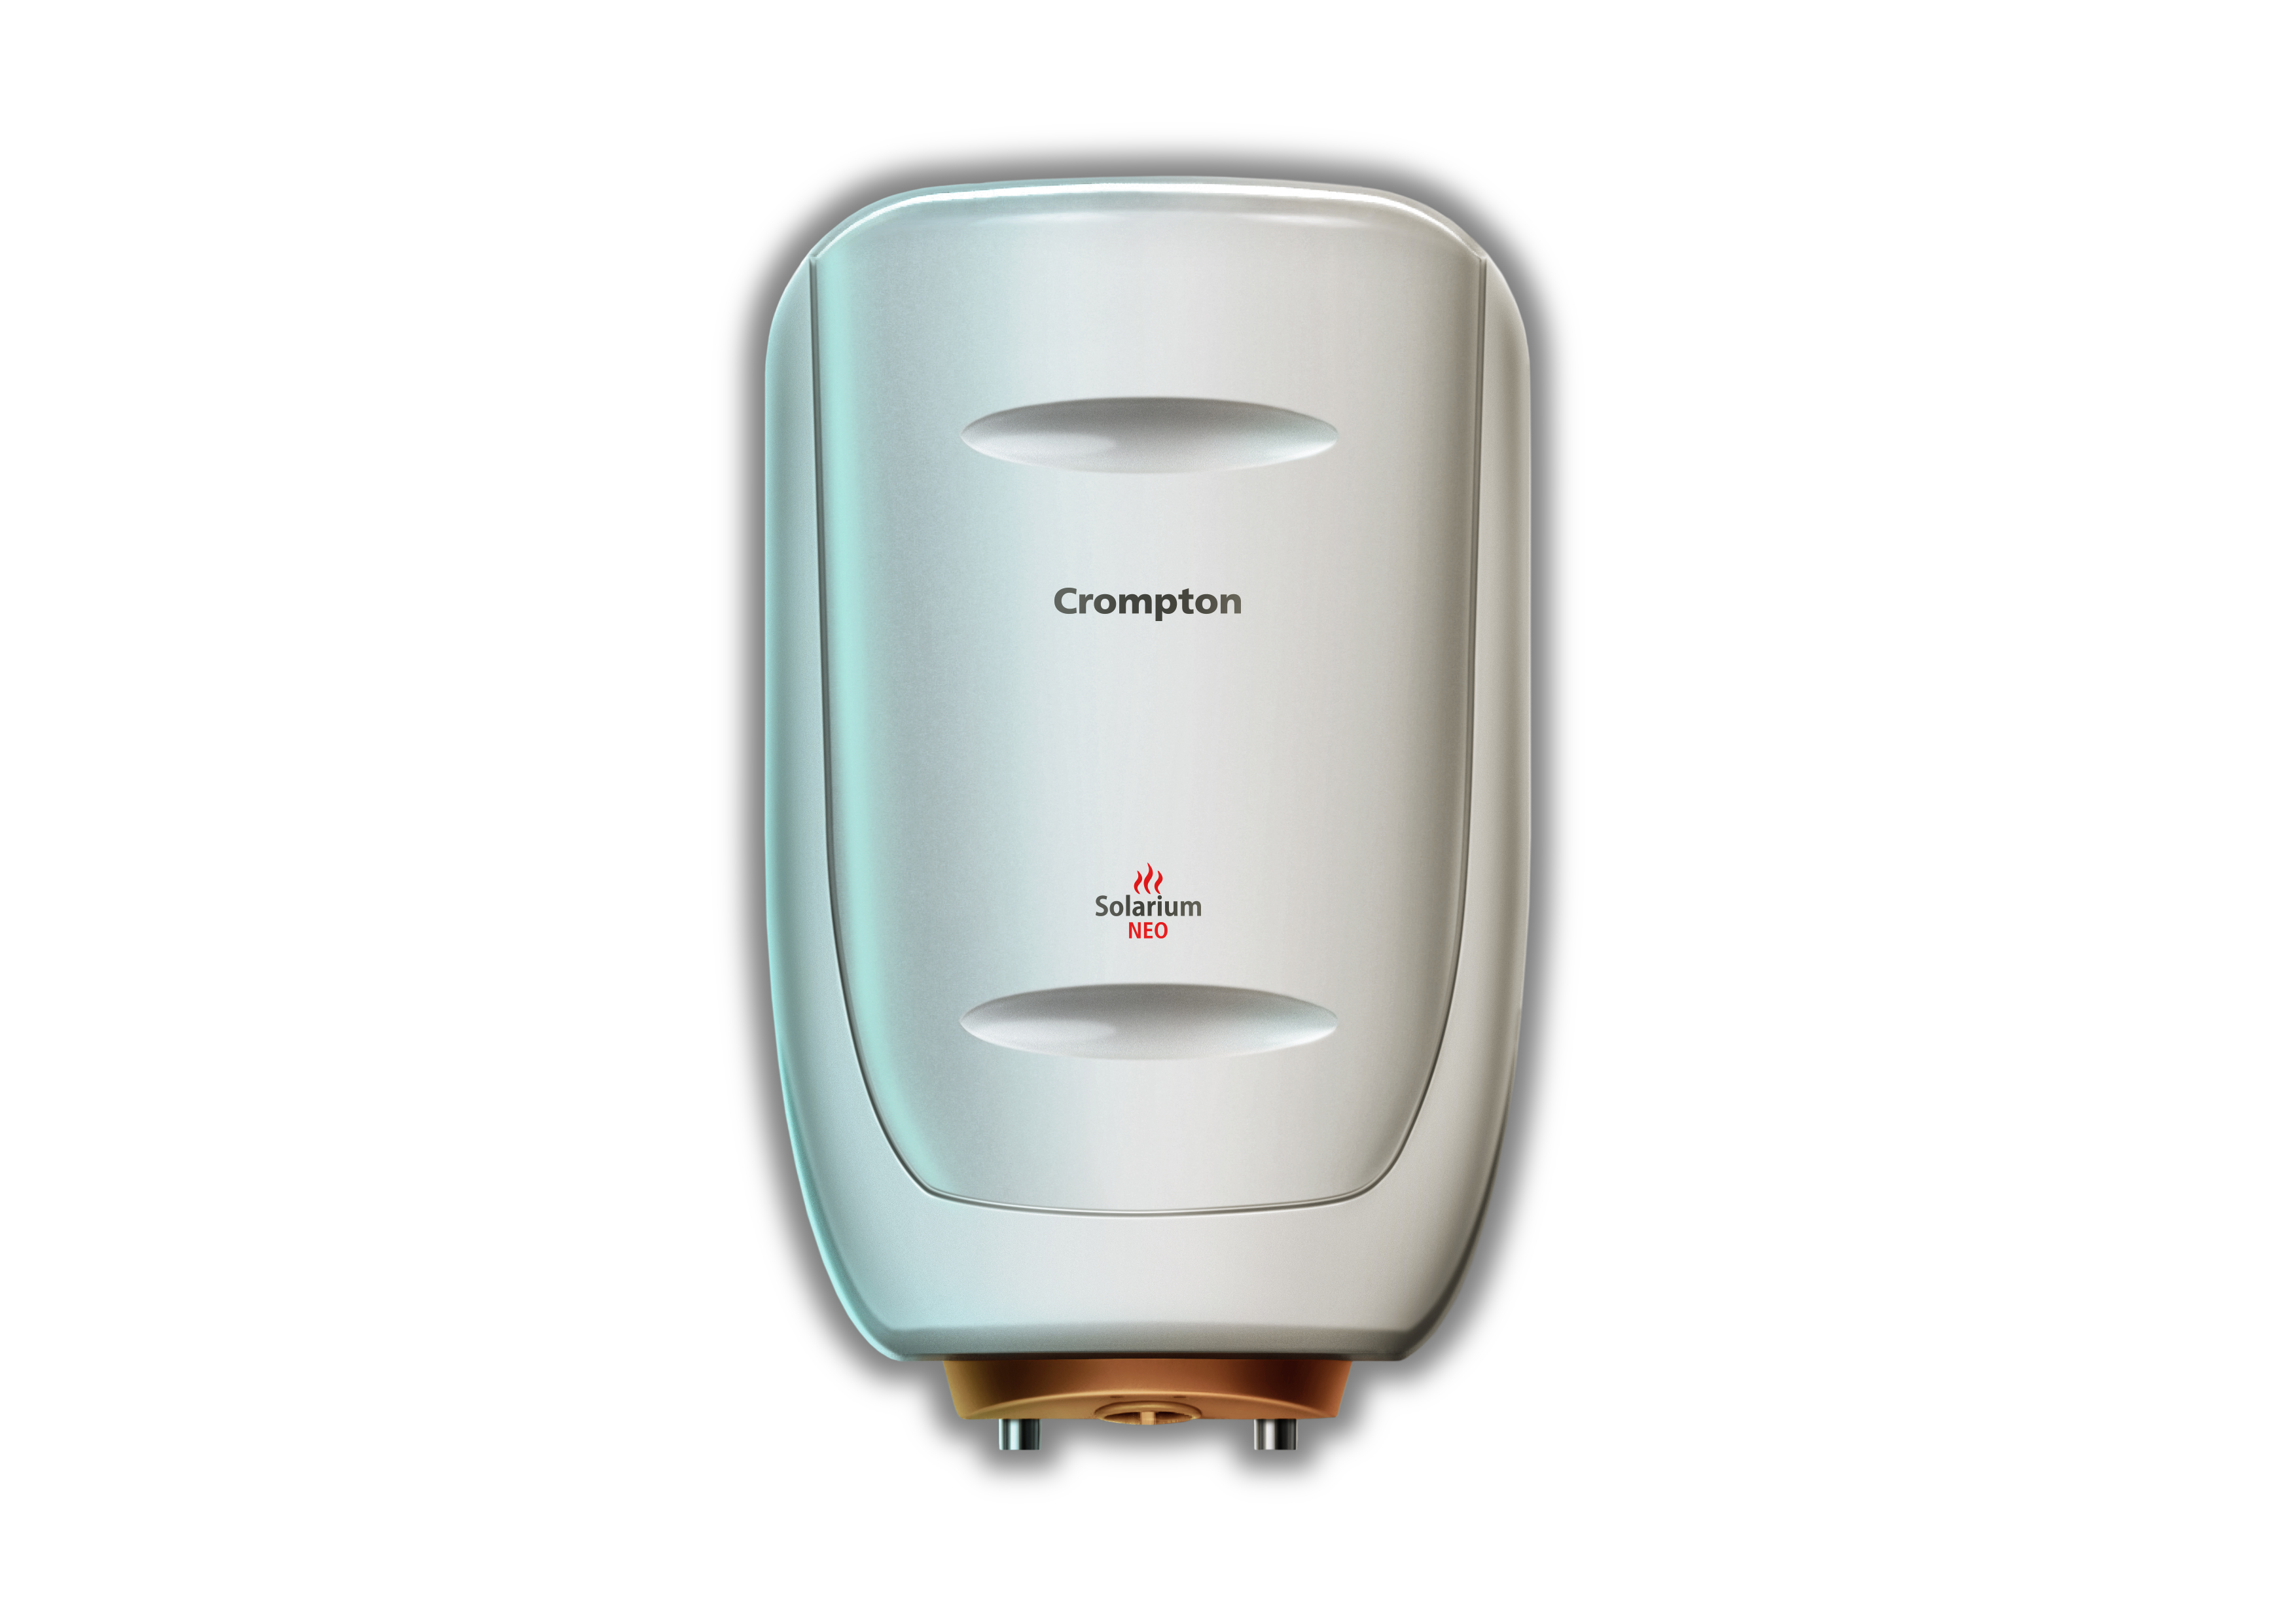 Crompton Water Heater - Solarium Neo